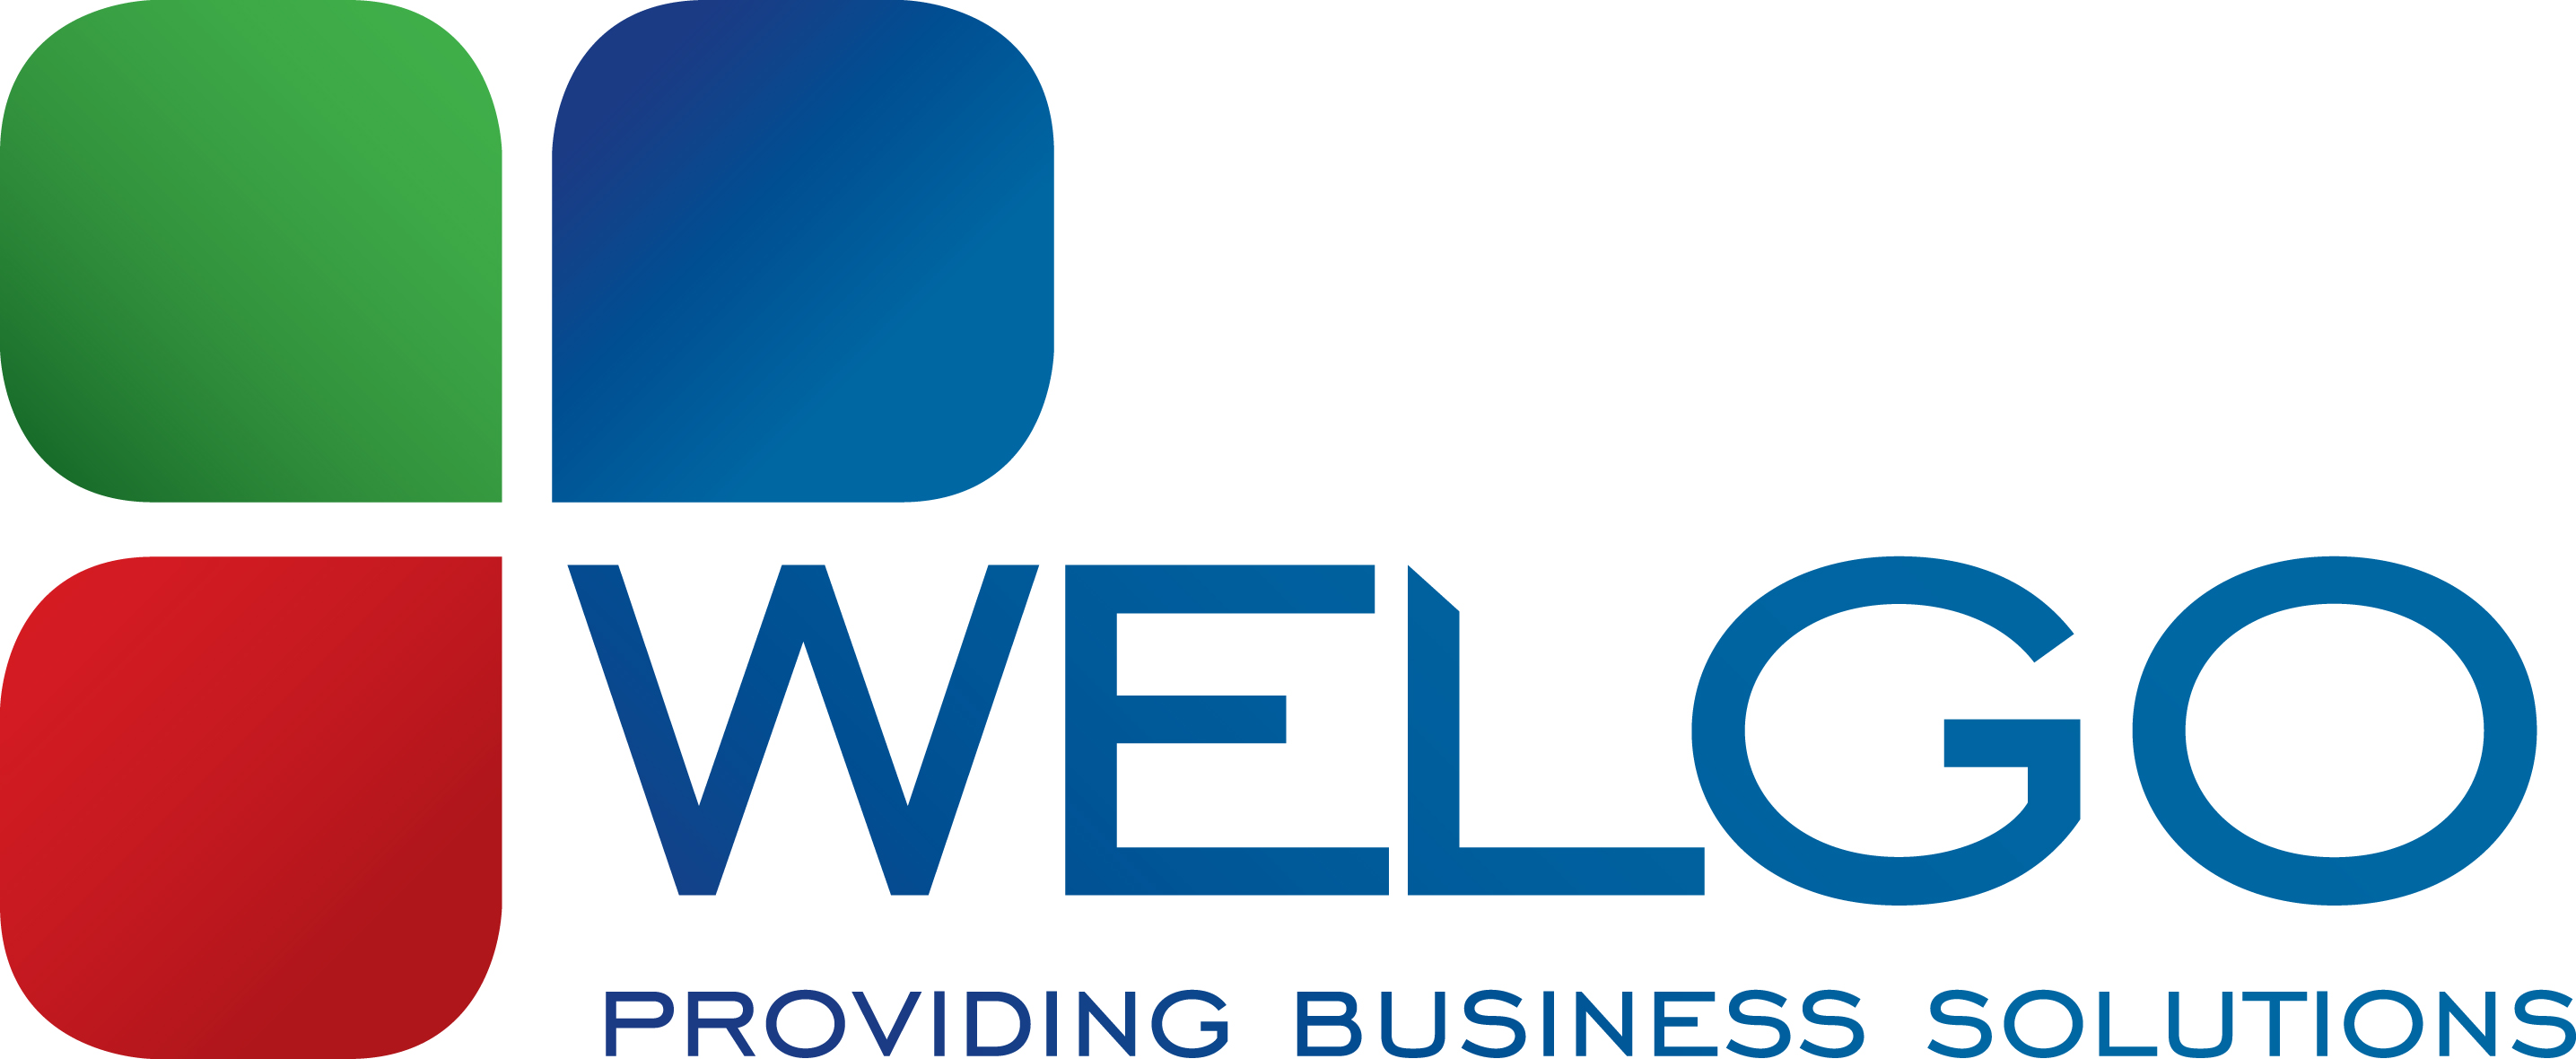 Welgo - Business Support in Edinburgh